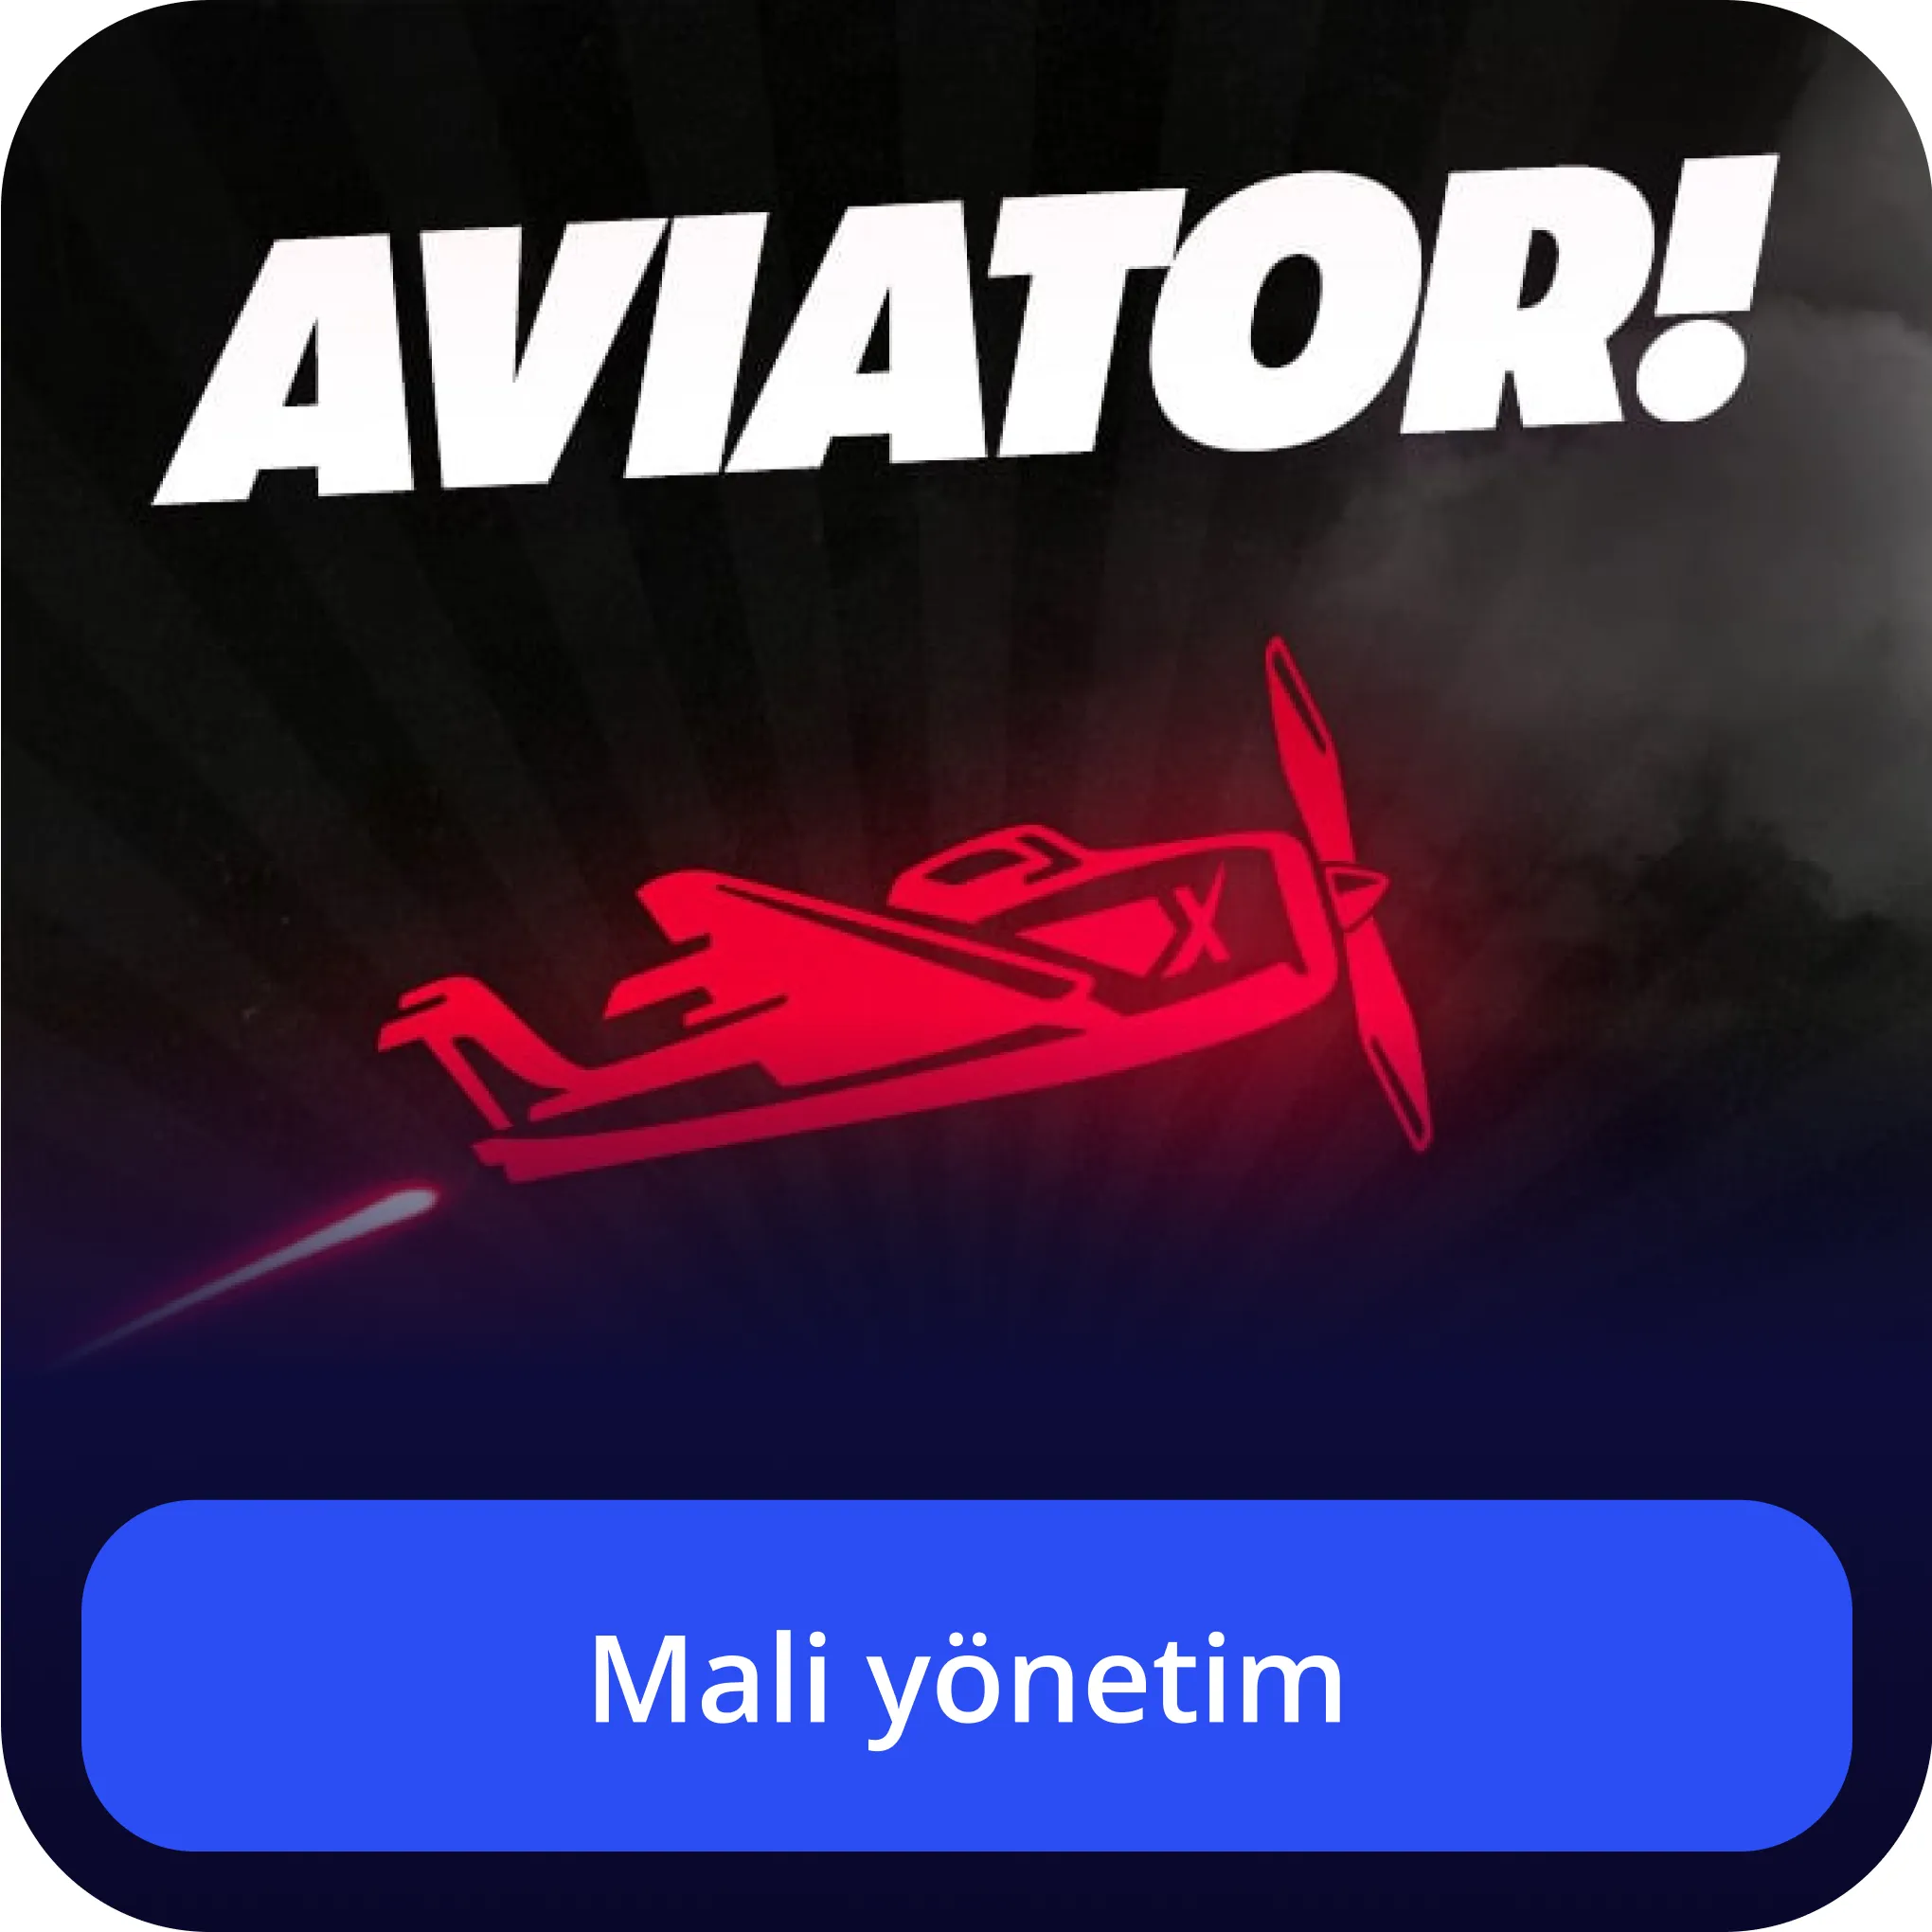 aviator 4rabet mali yönetim